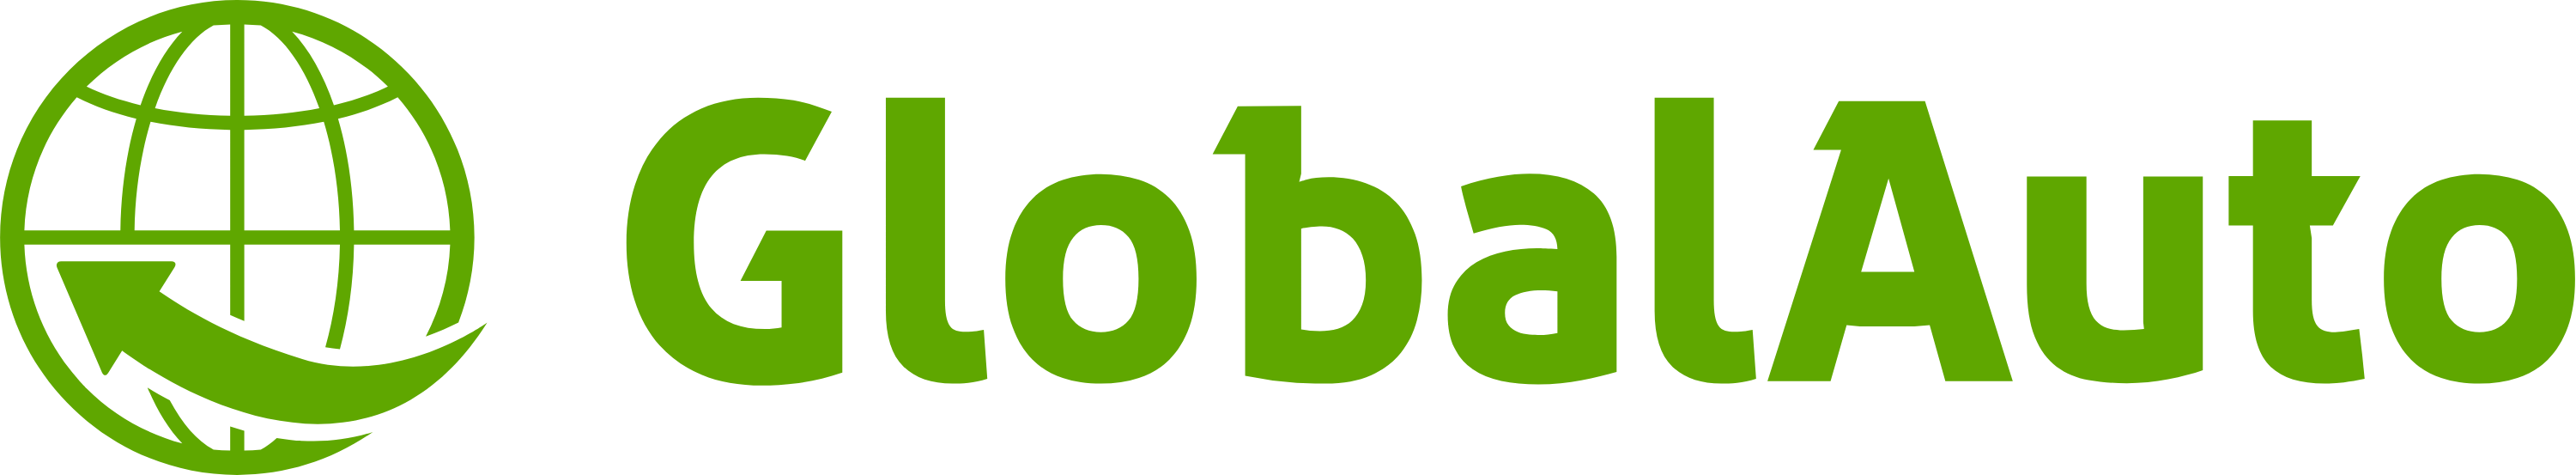 Color logo - no background - Green_02